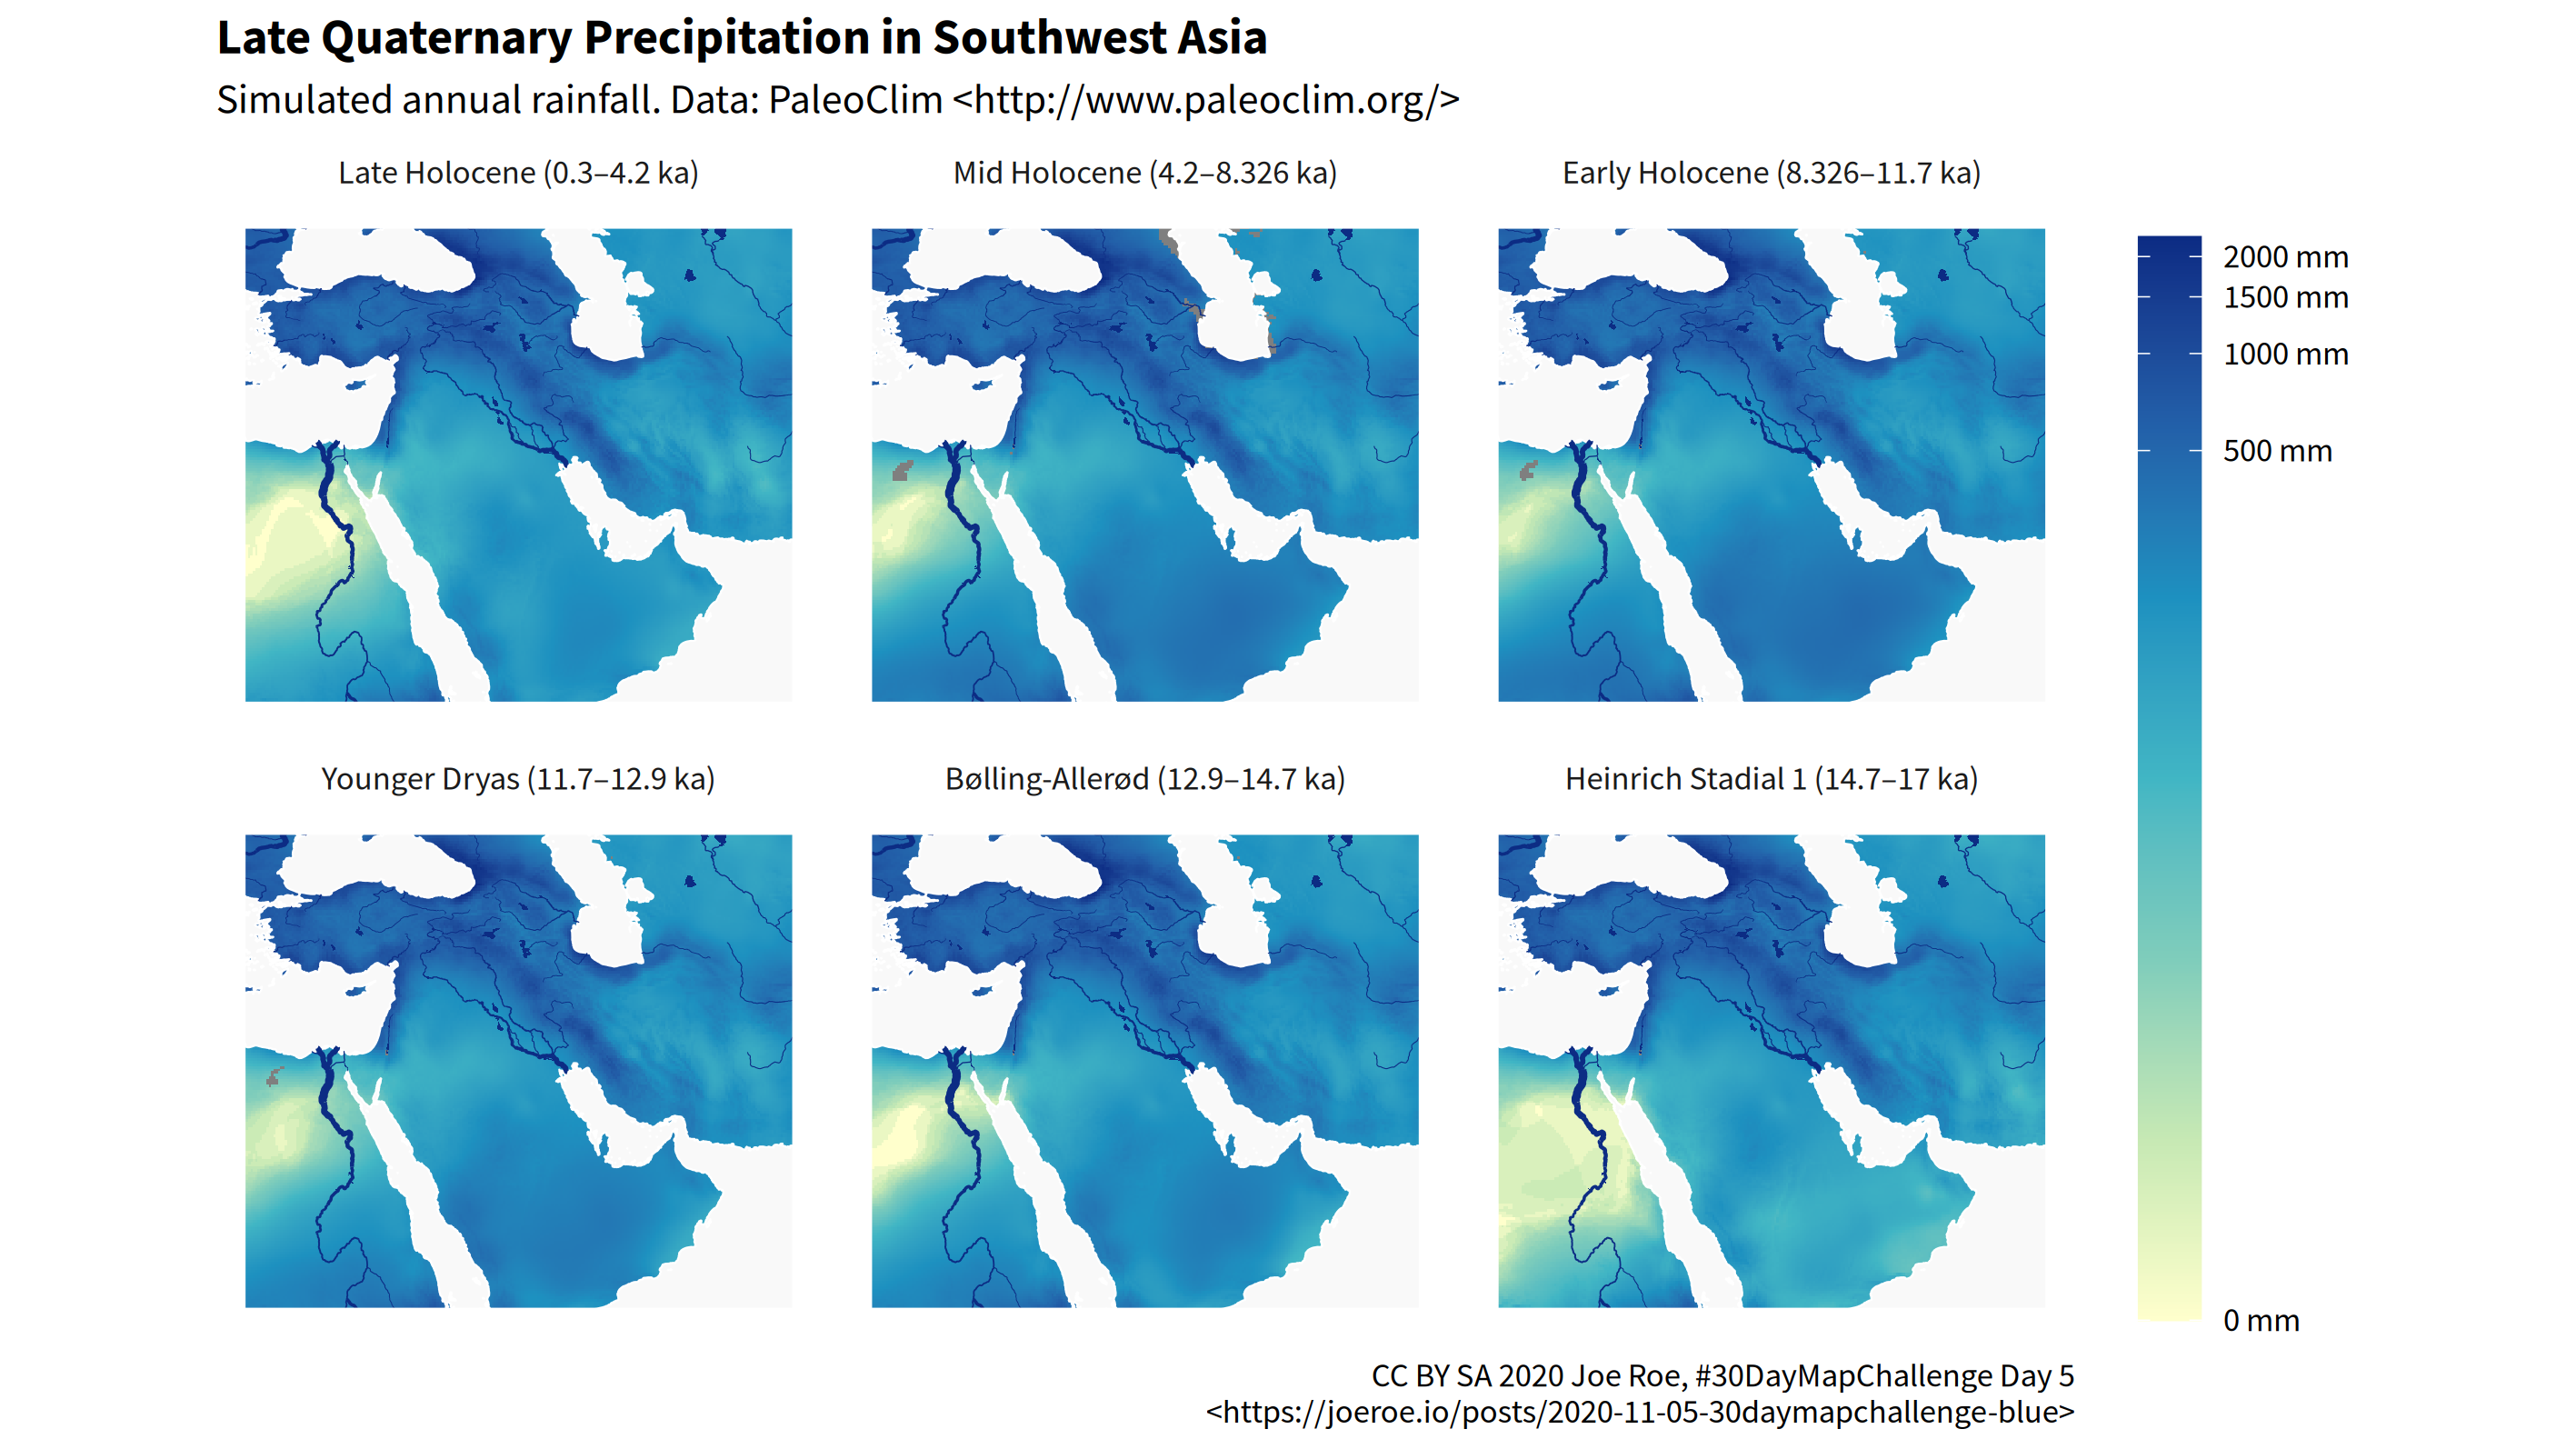 Late Quaternary Precipitation in Southwest
Asia